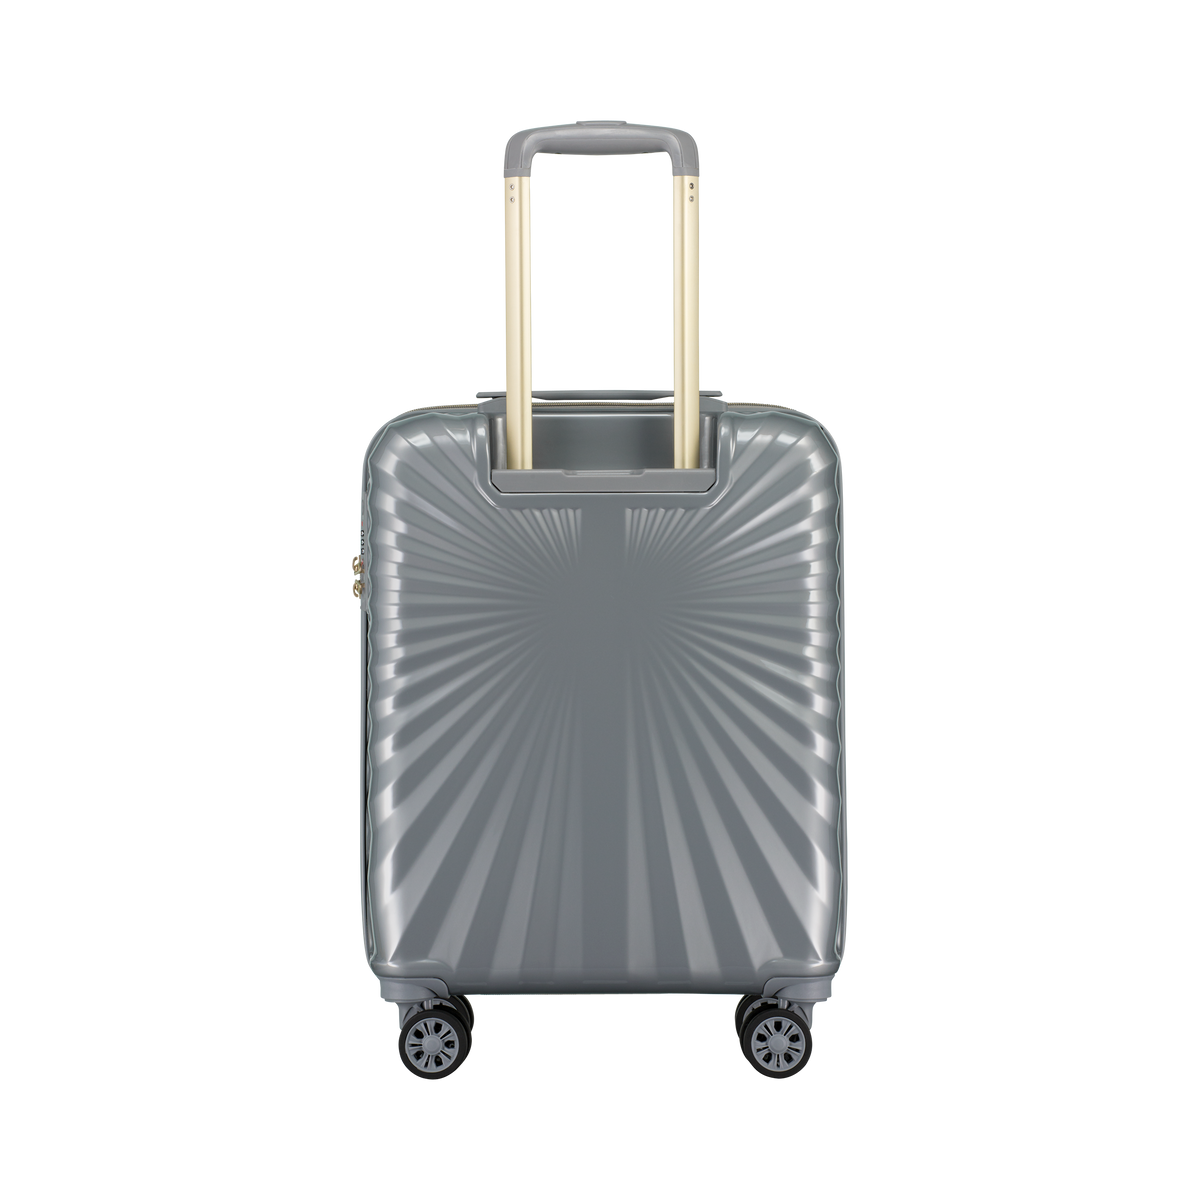 Travel Inspira Luggage Scale - Silver - Model TIEL01